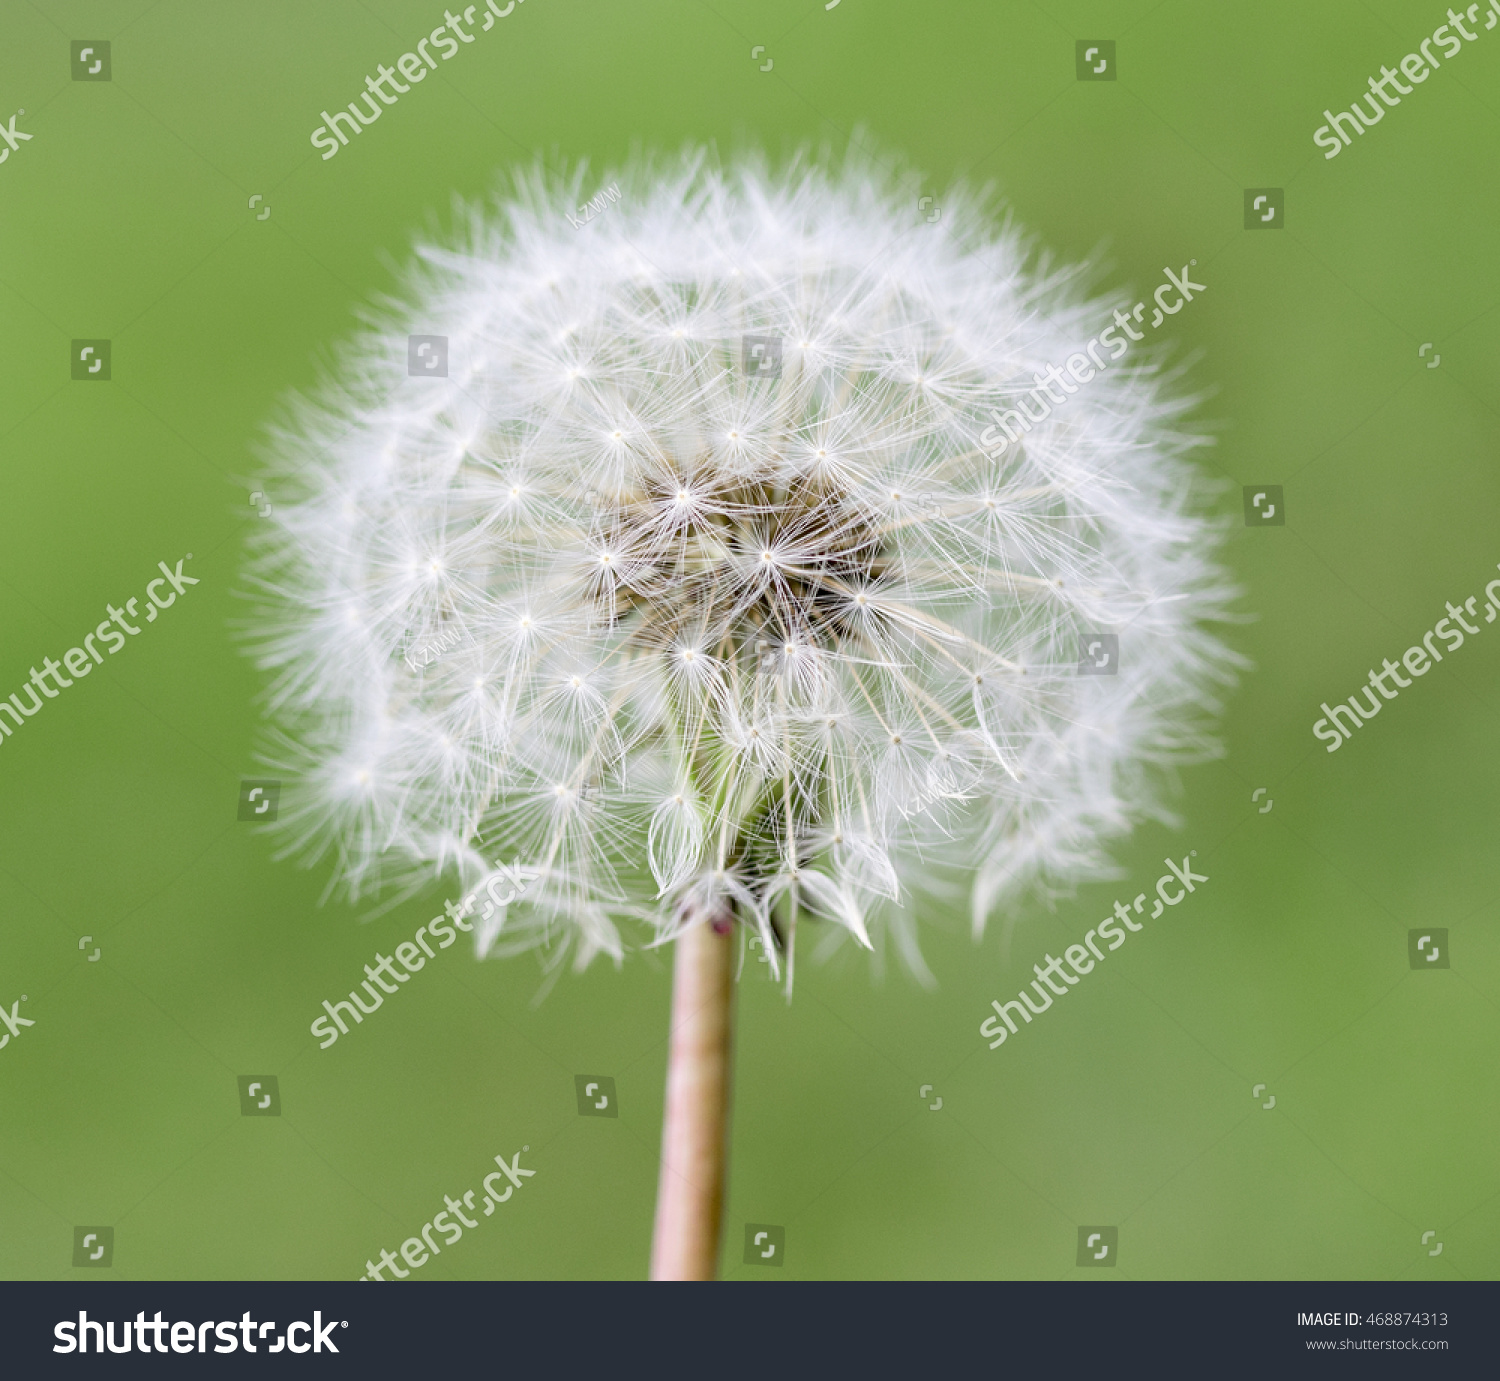 White Dandelion Nature Stock Photo 468874313 - Shutterstock